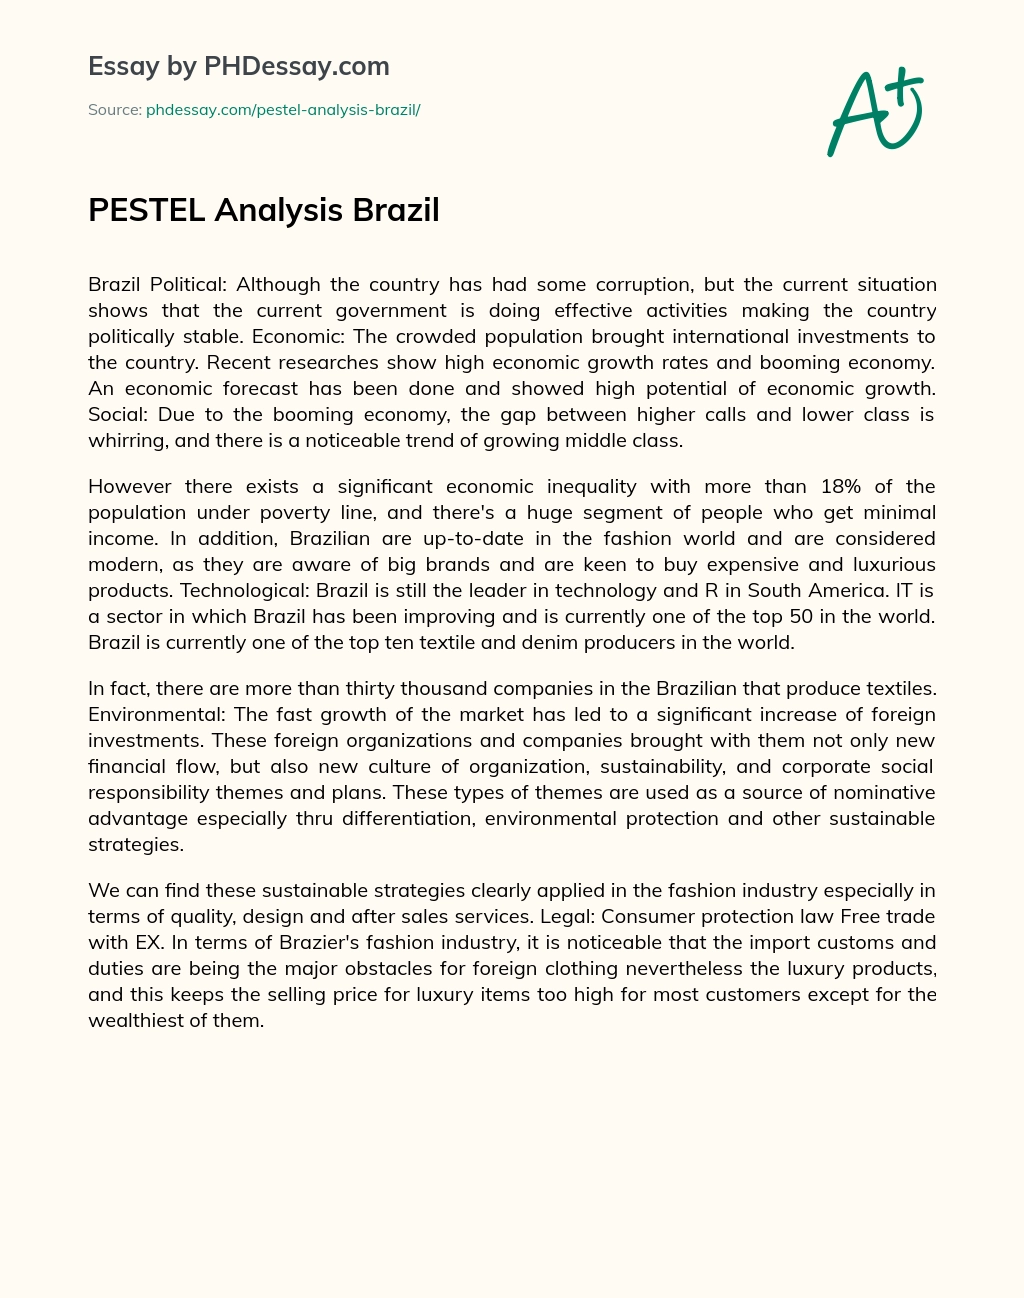 PESTEL Analysis Brazil essay